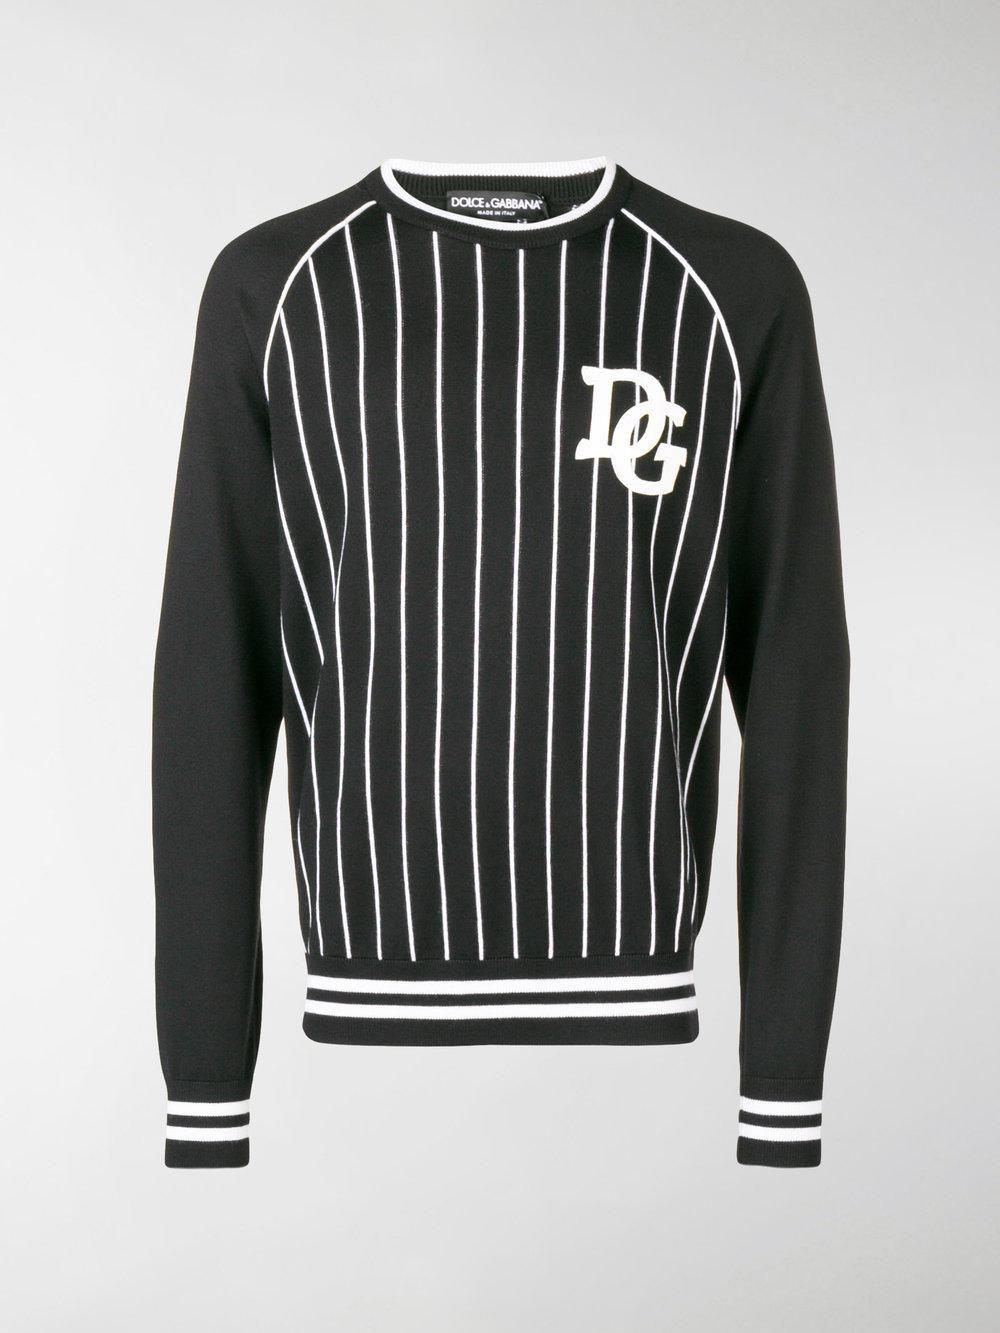 Black Striped Logo - Dolce & Gabbana Striped Logo Patch Sweater in Black for Men - Lyst